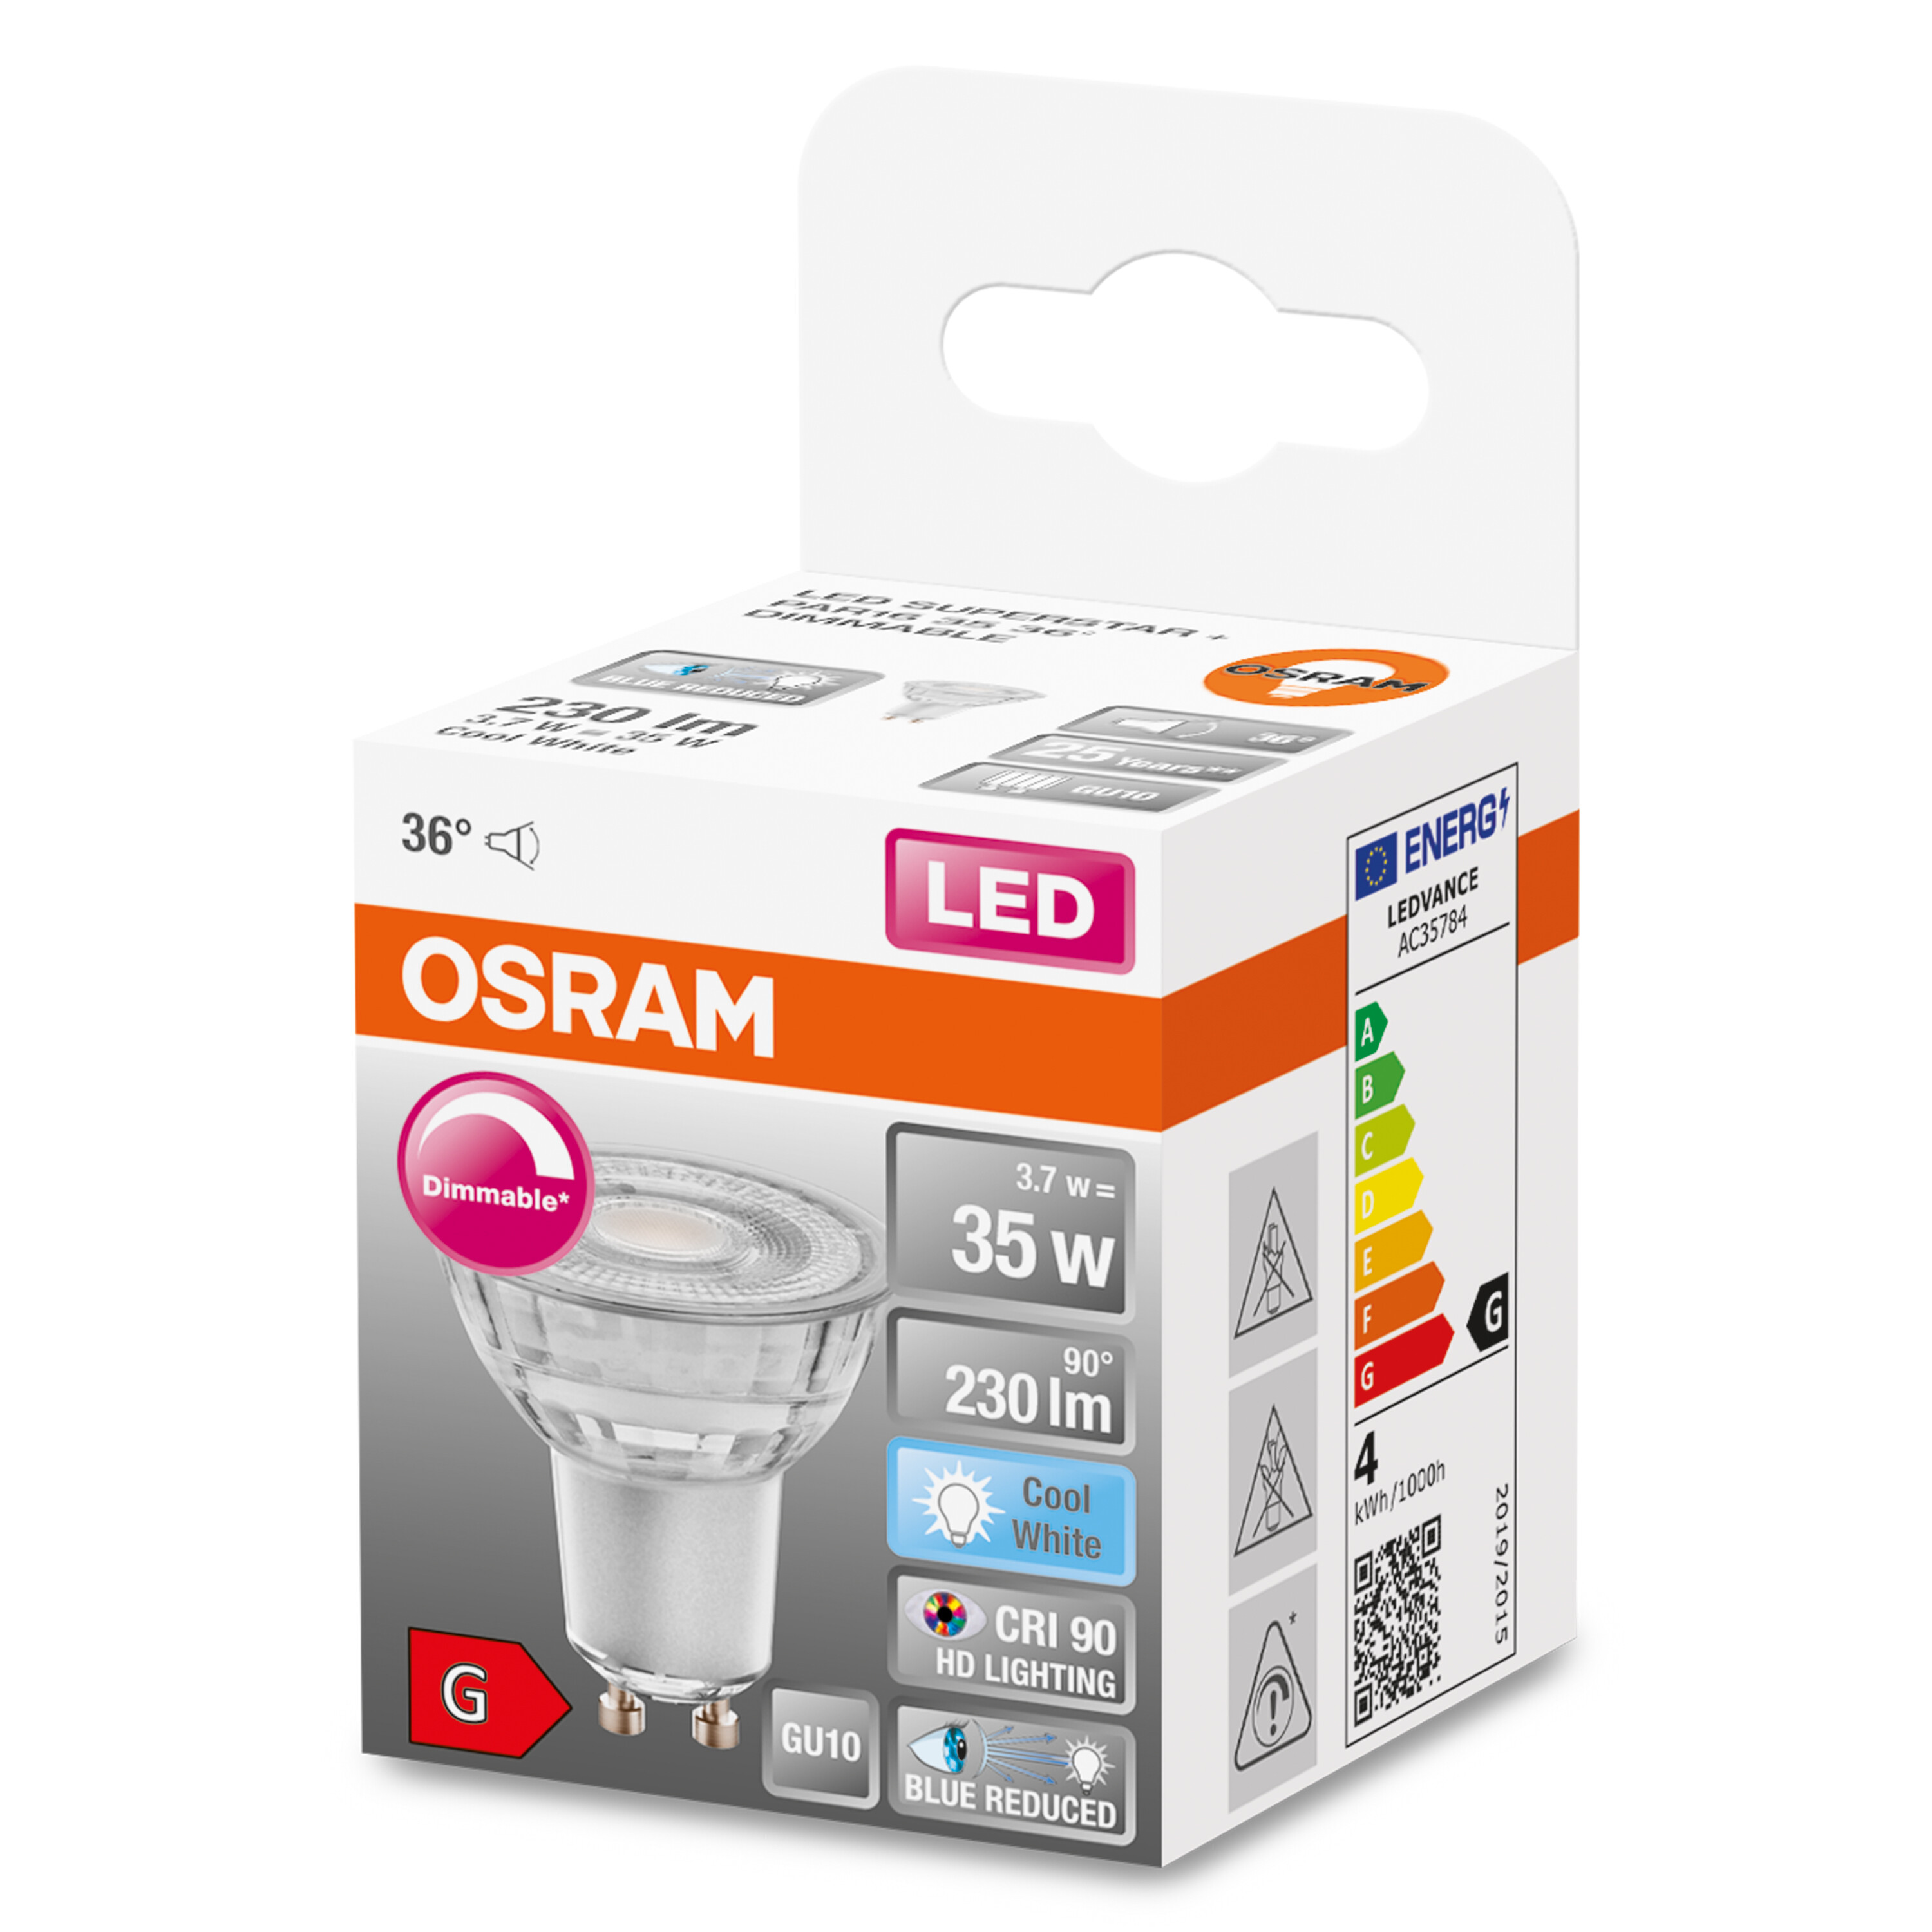 OSRAM  LED SUPERSTAR PLUS Reflektor-Lampe LED Lumen 230 REFLECTOR Kaltweiß PAR16